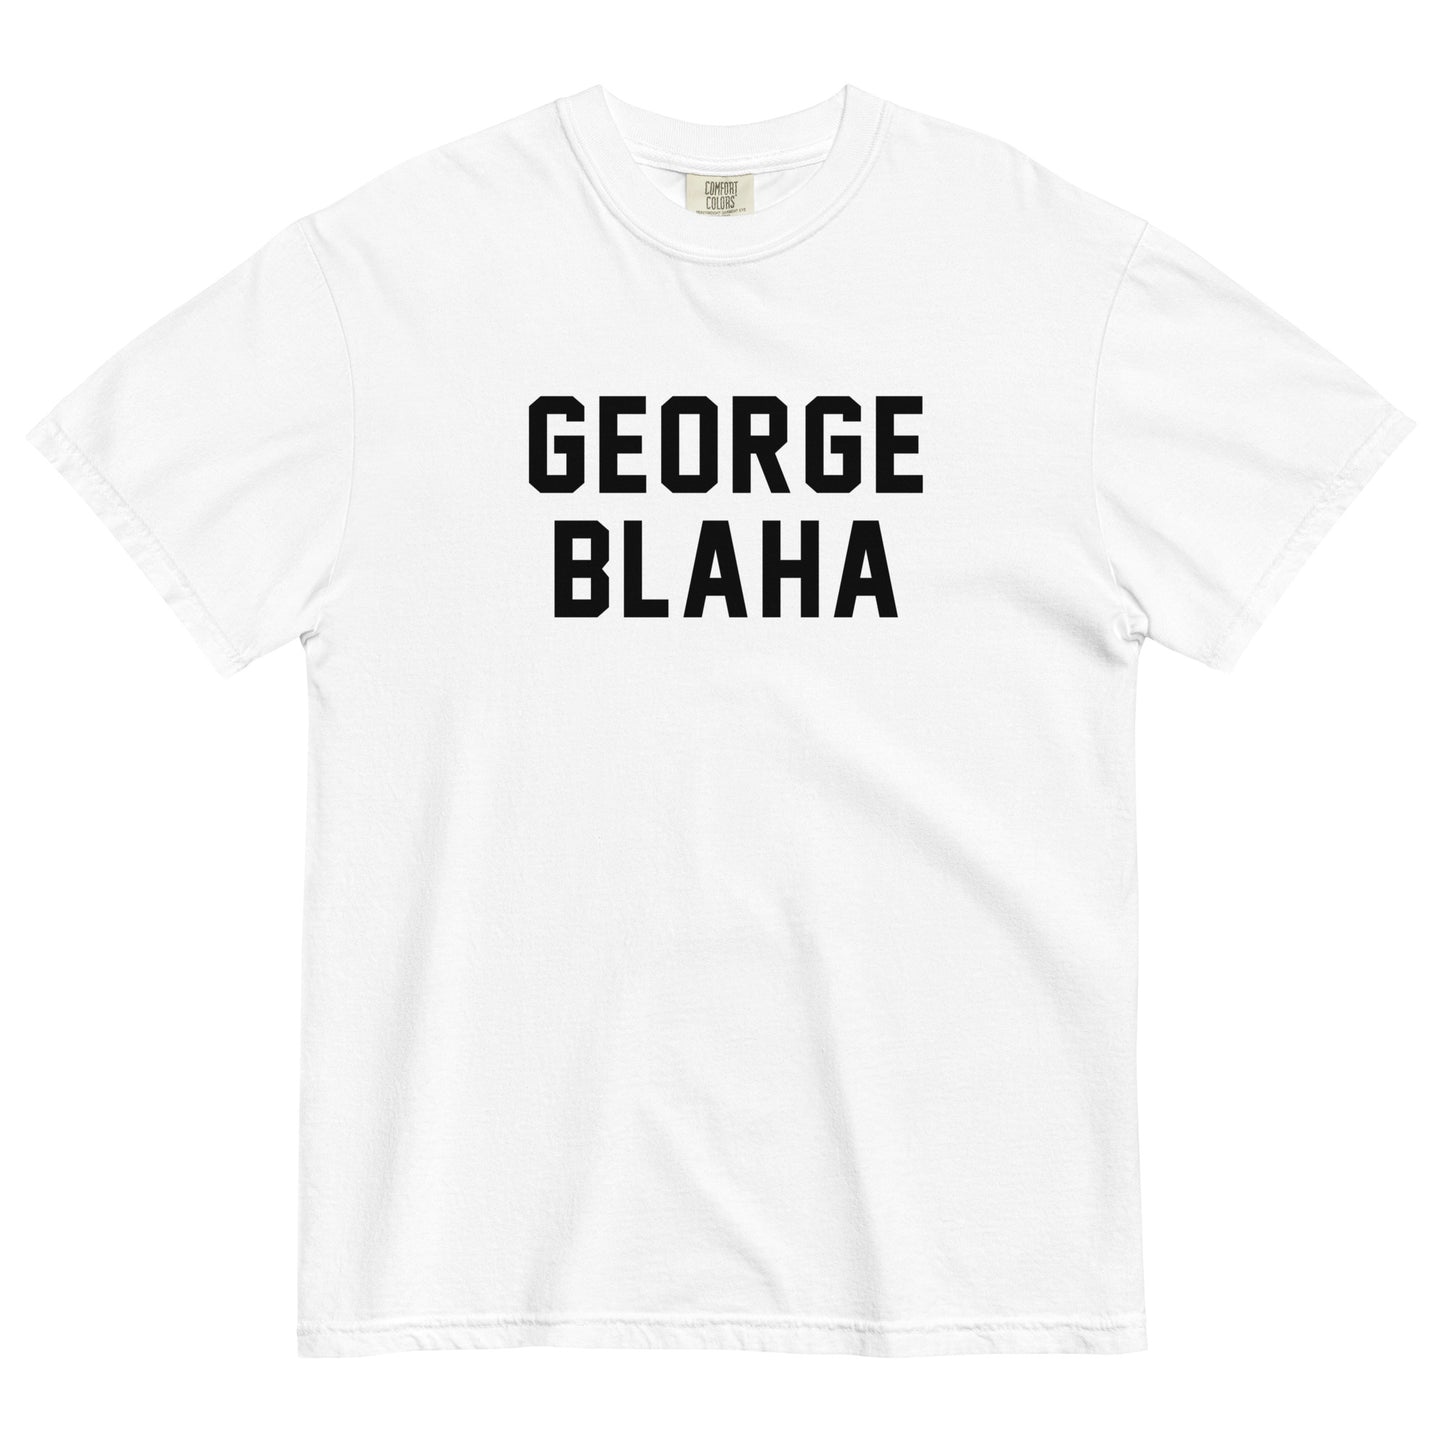 GEORGE BLAHA